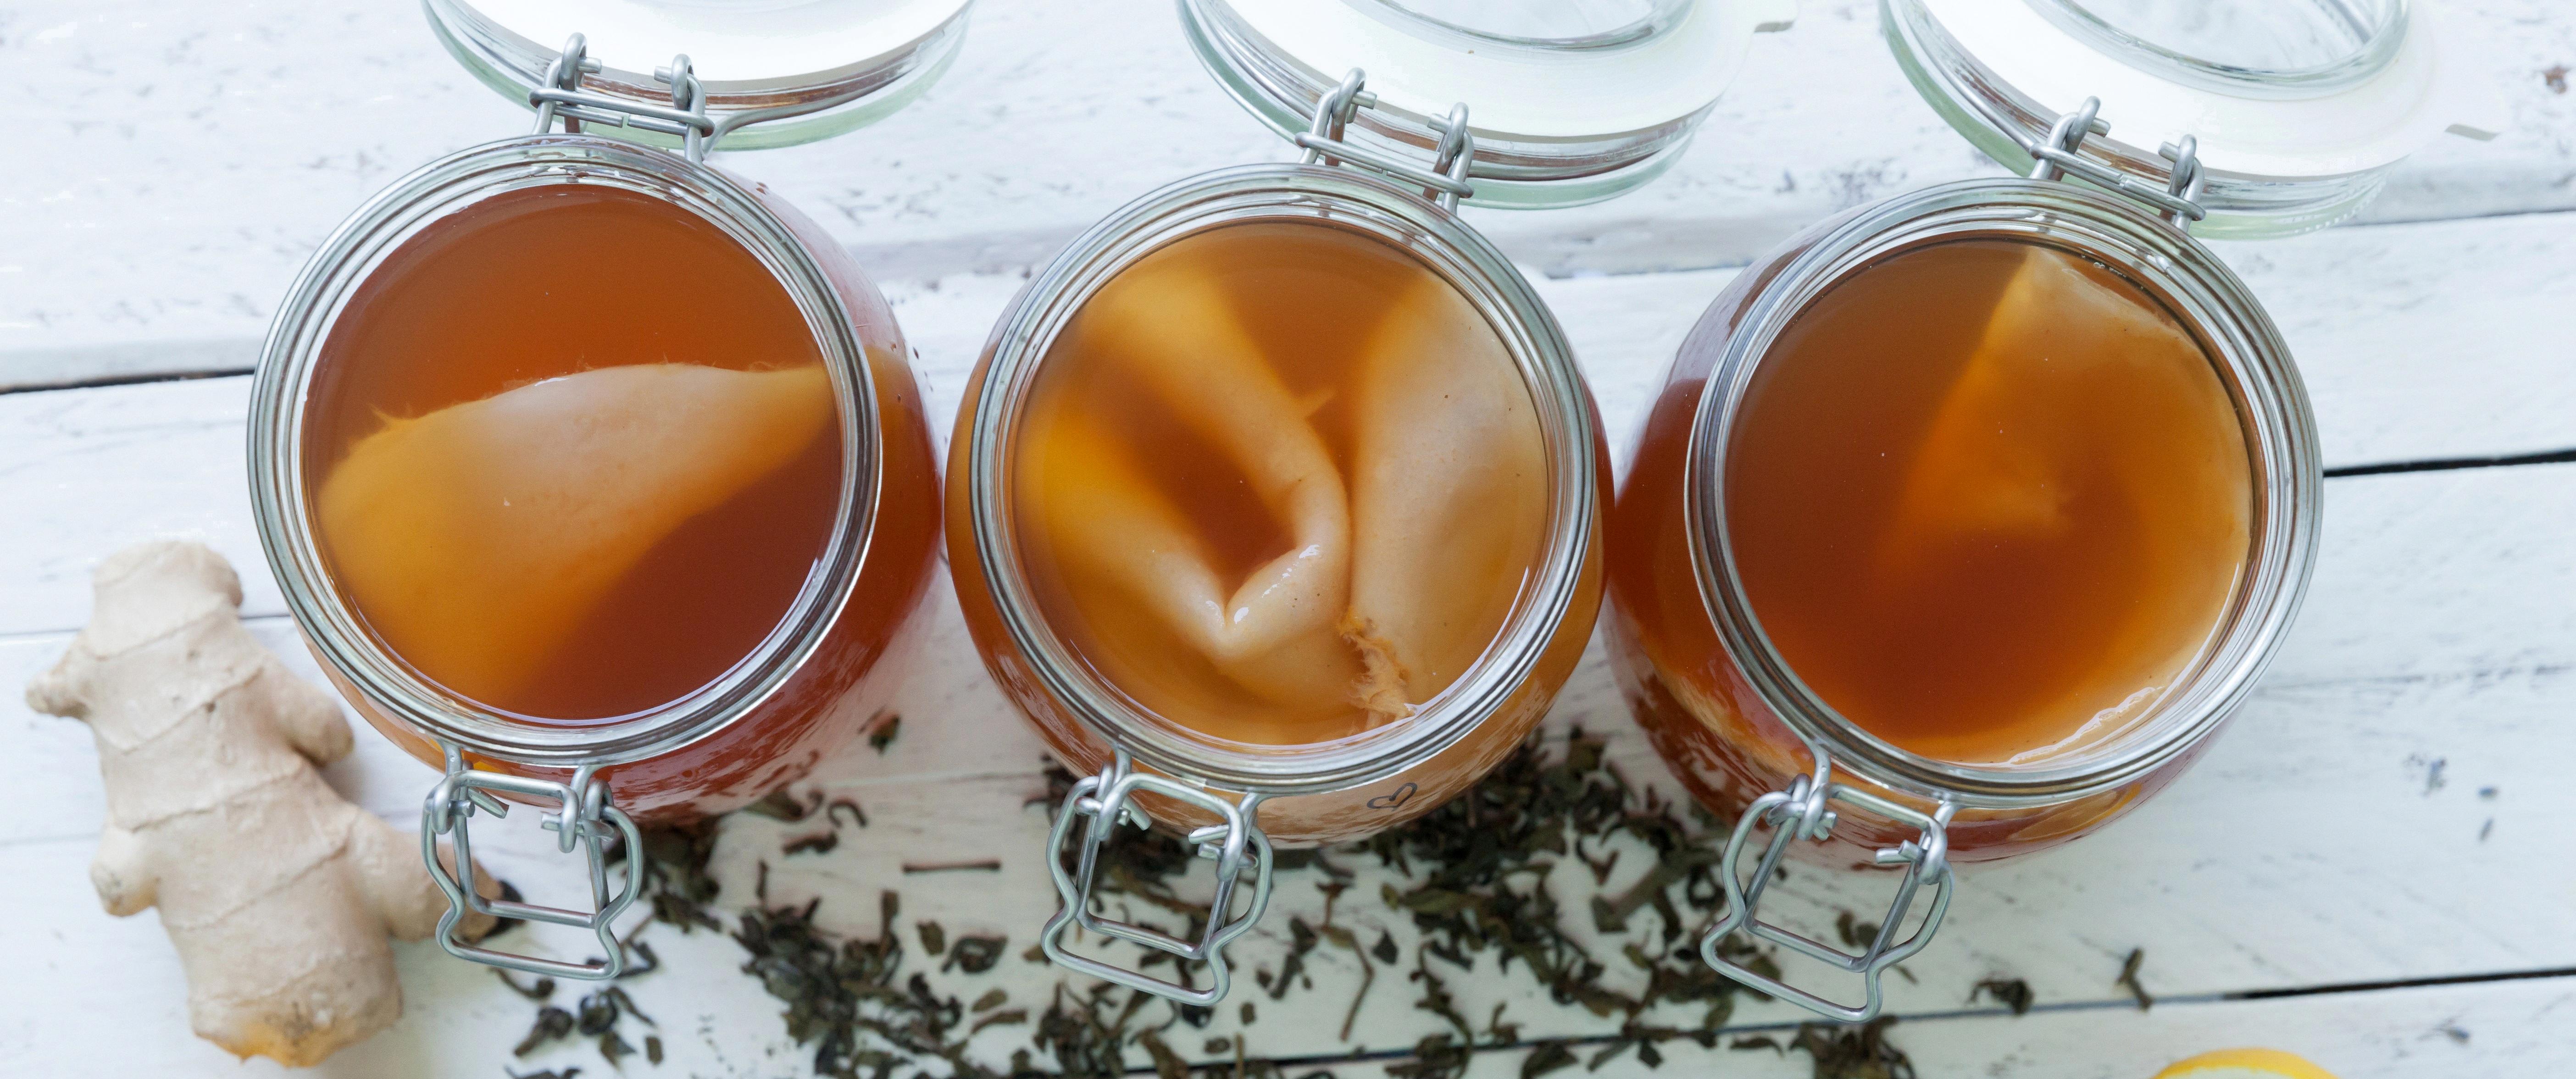 fizzy tea drink made by fermentation